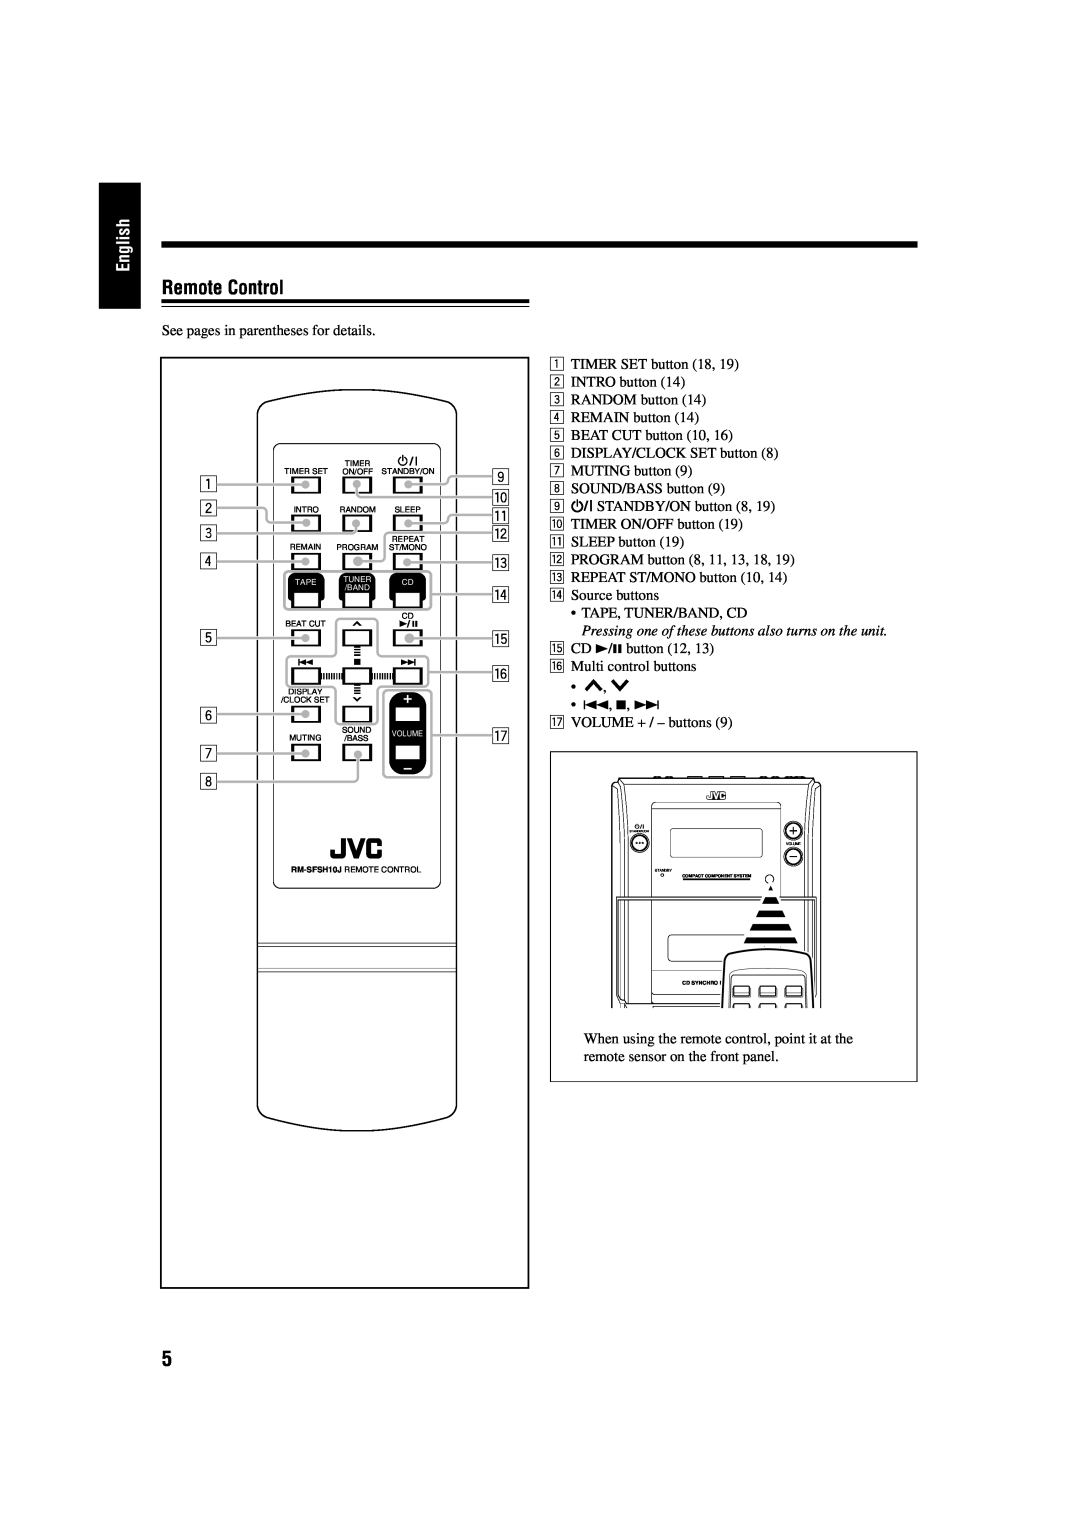 JVC FS-H10 manual Remote Control, English, 1 2 3 4 5 